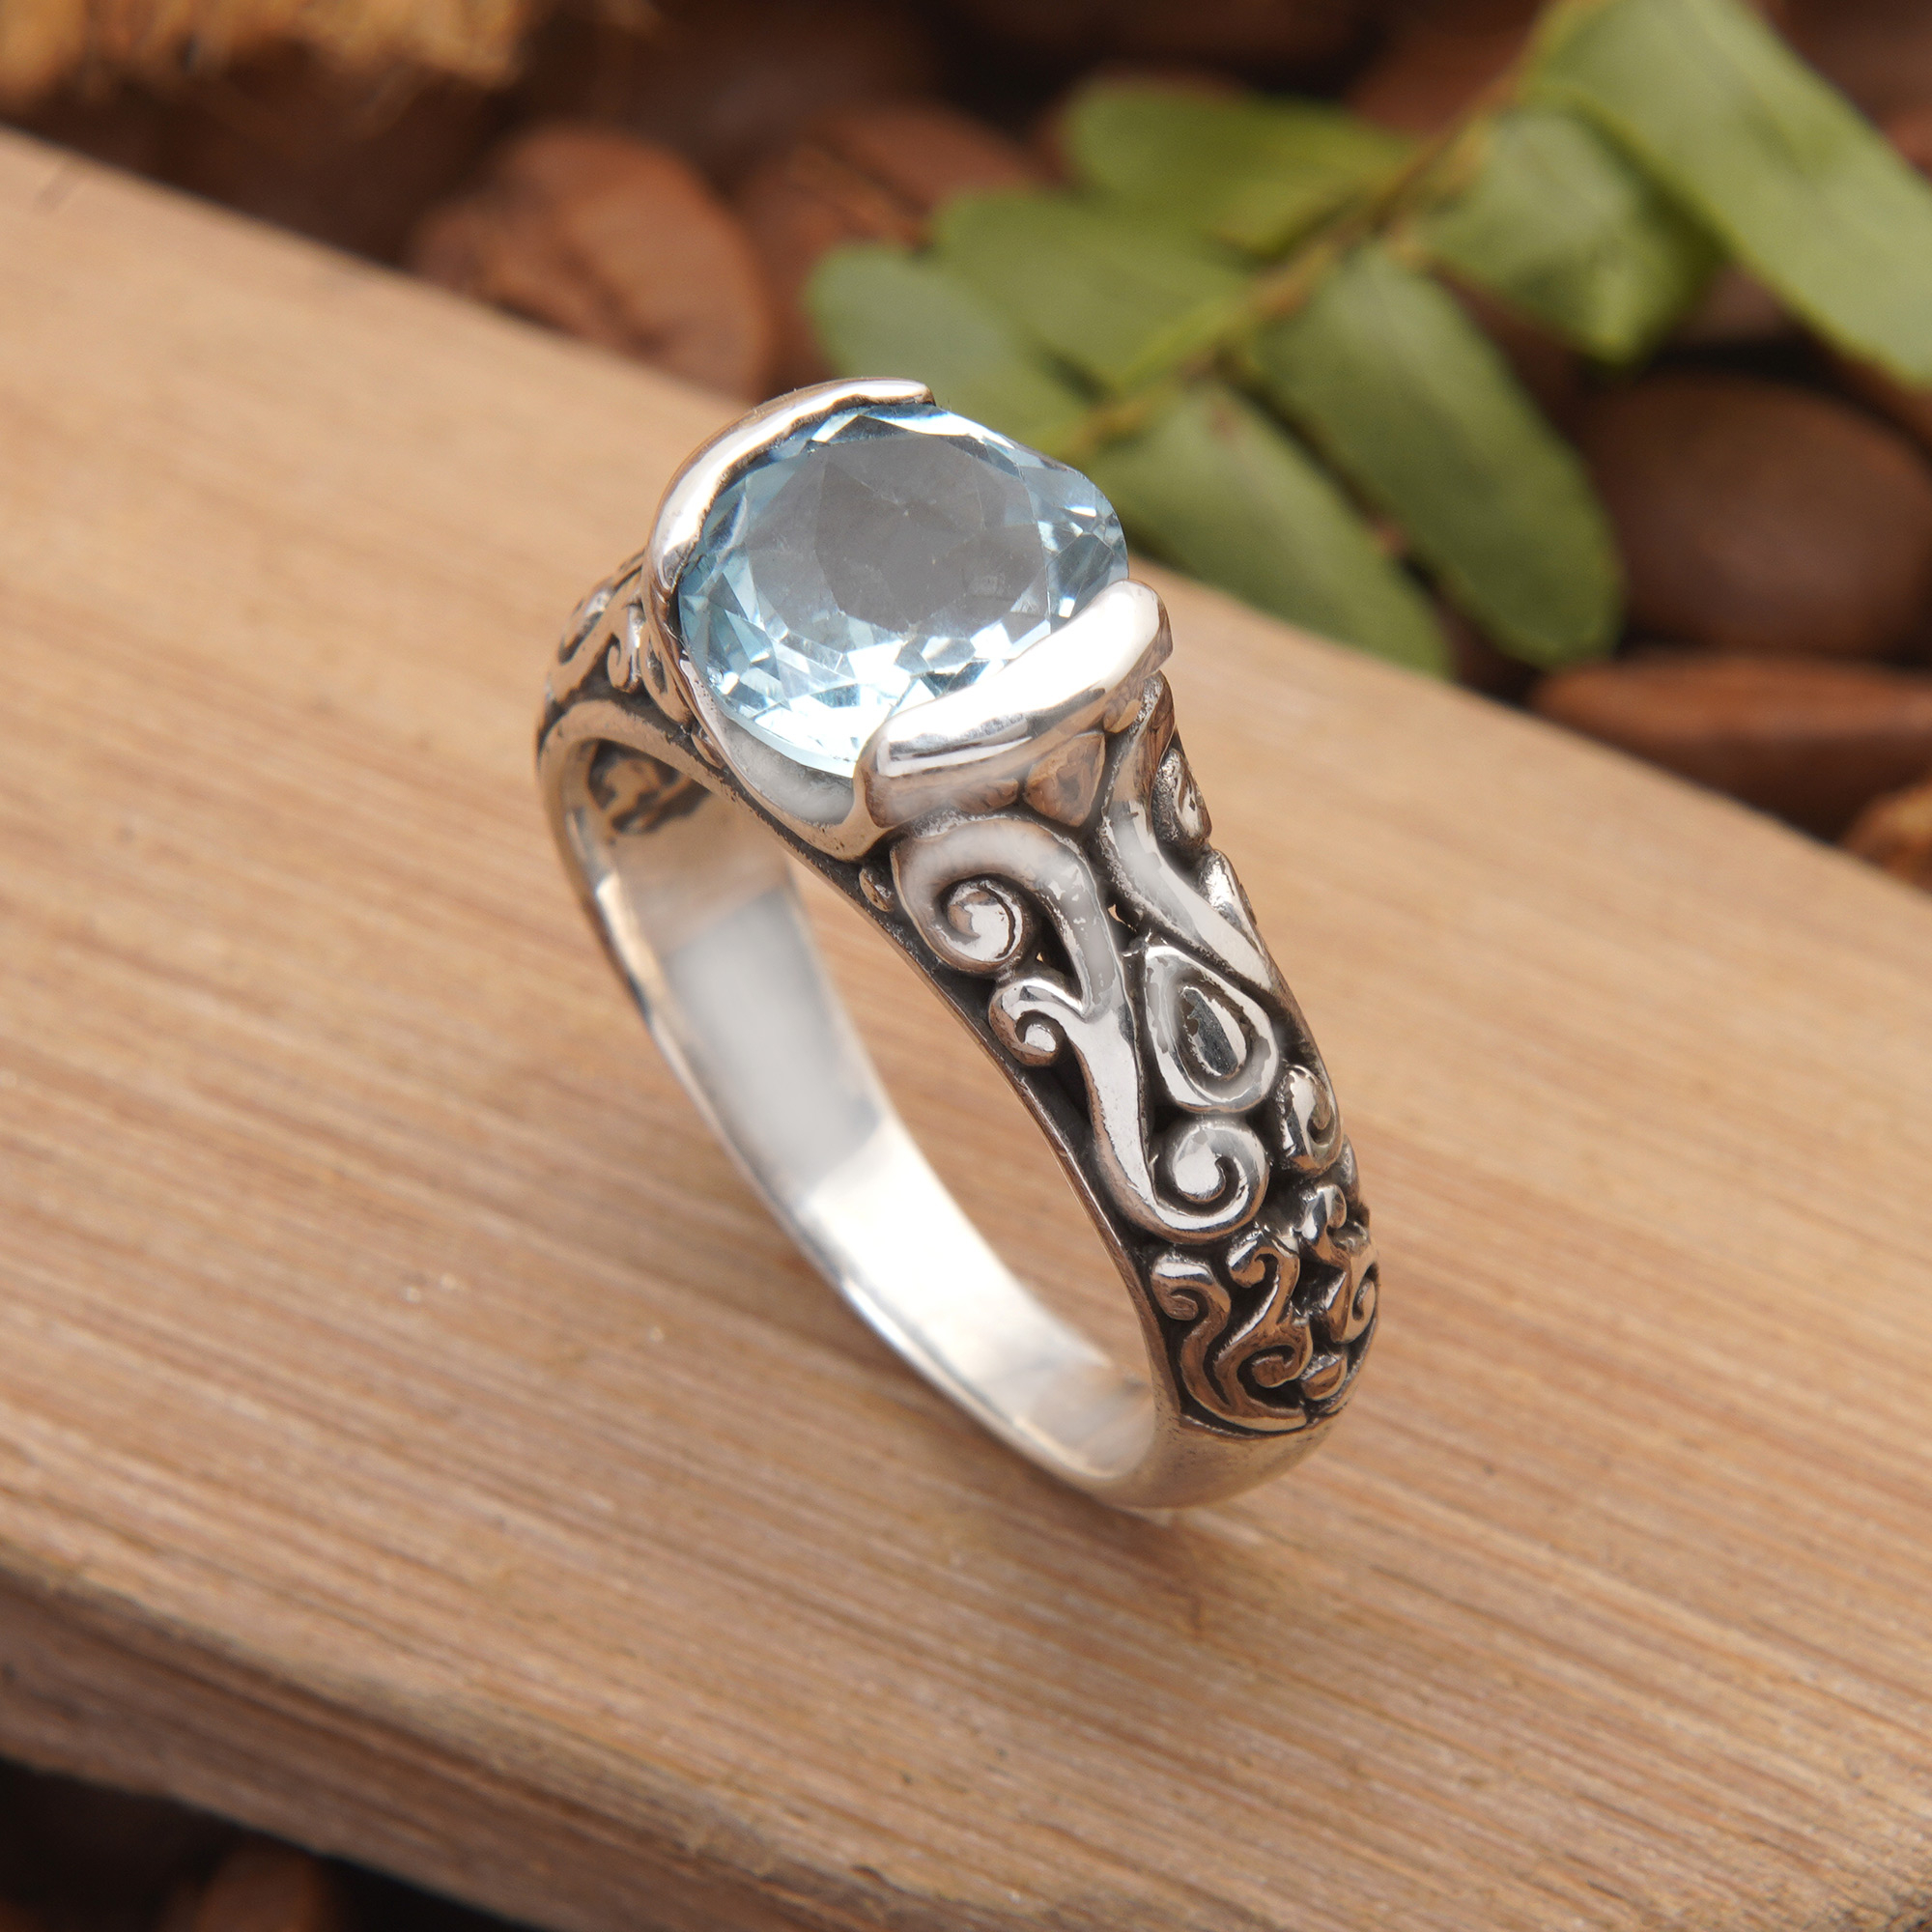 Sterling Silver Single Stone Ring with 2.5 Carat Blue Topaz - Azure Vine  Embrace | NOVICA